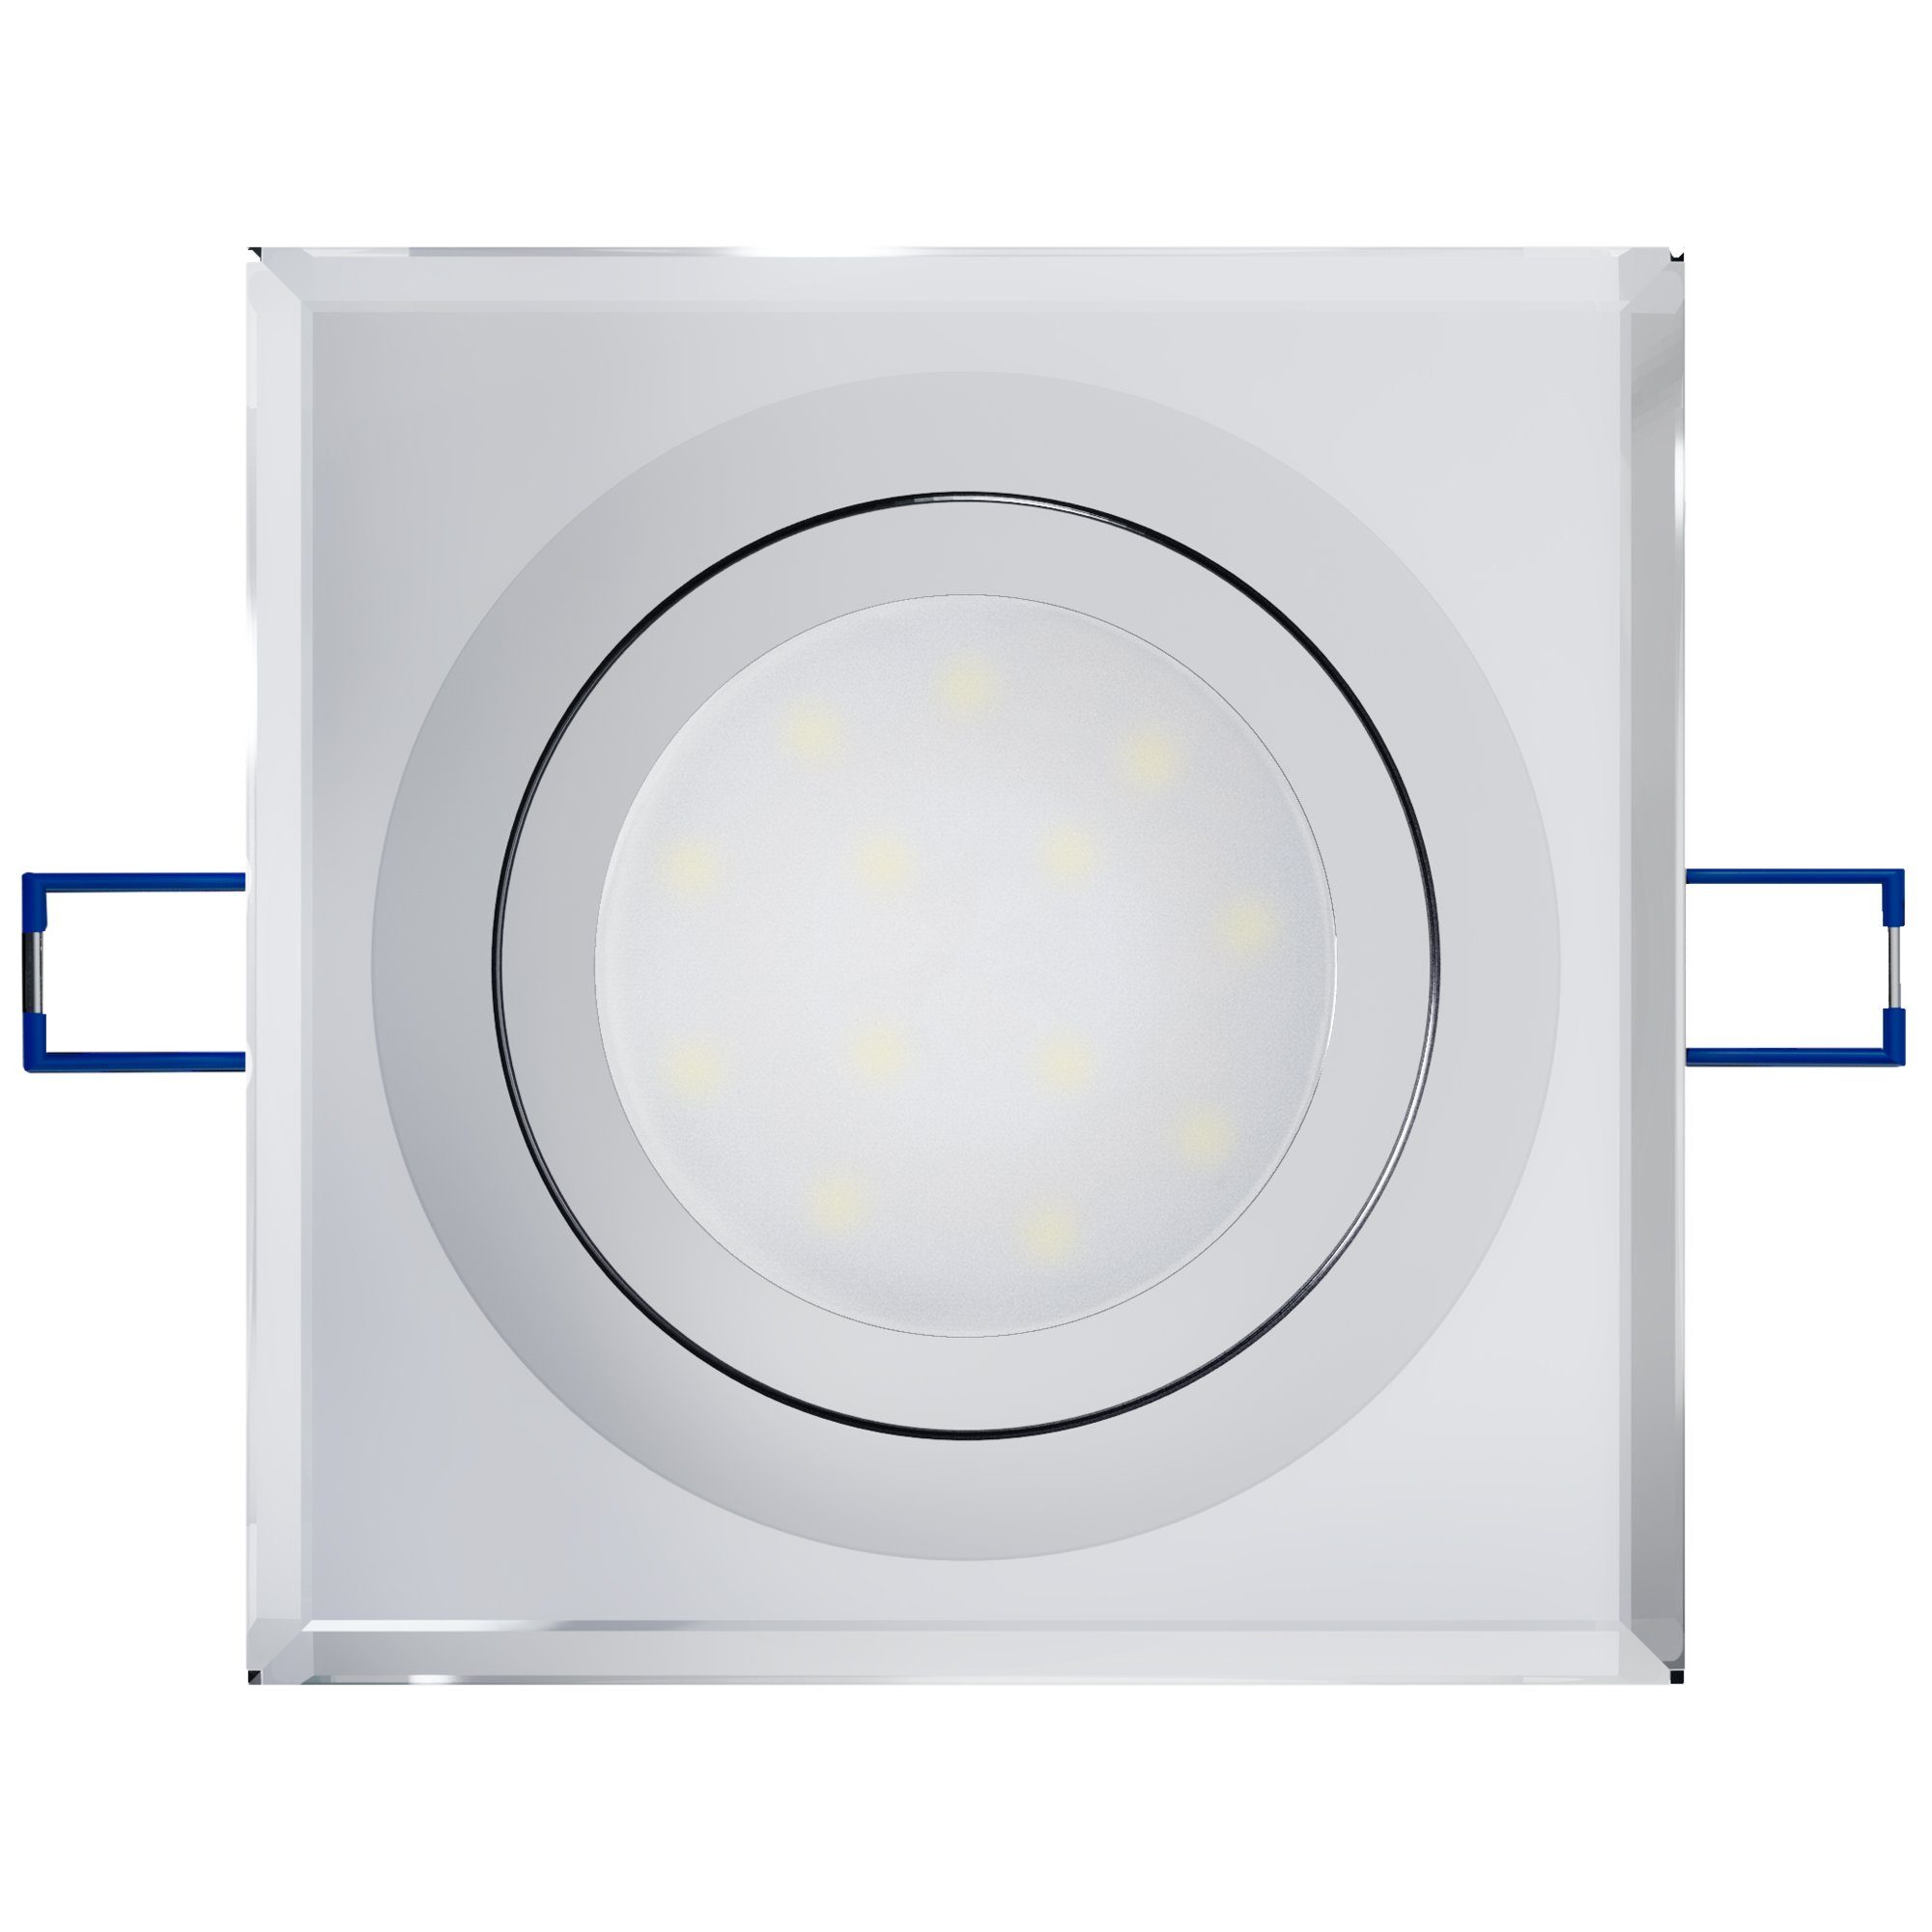 Warmweiß schwenkbar flach LED Einbauspot eckig mit Modul Einbaustrahler Glas SSC-LUXon LED LED dimmbar,